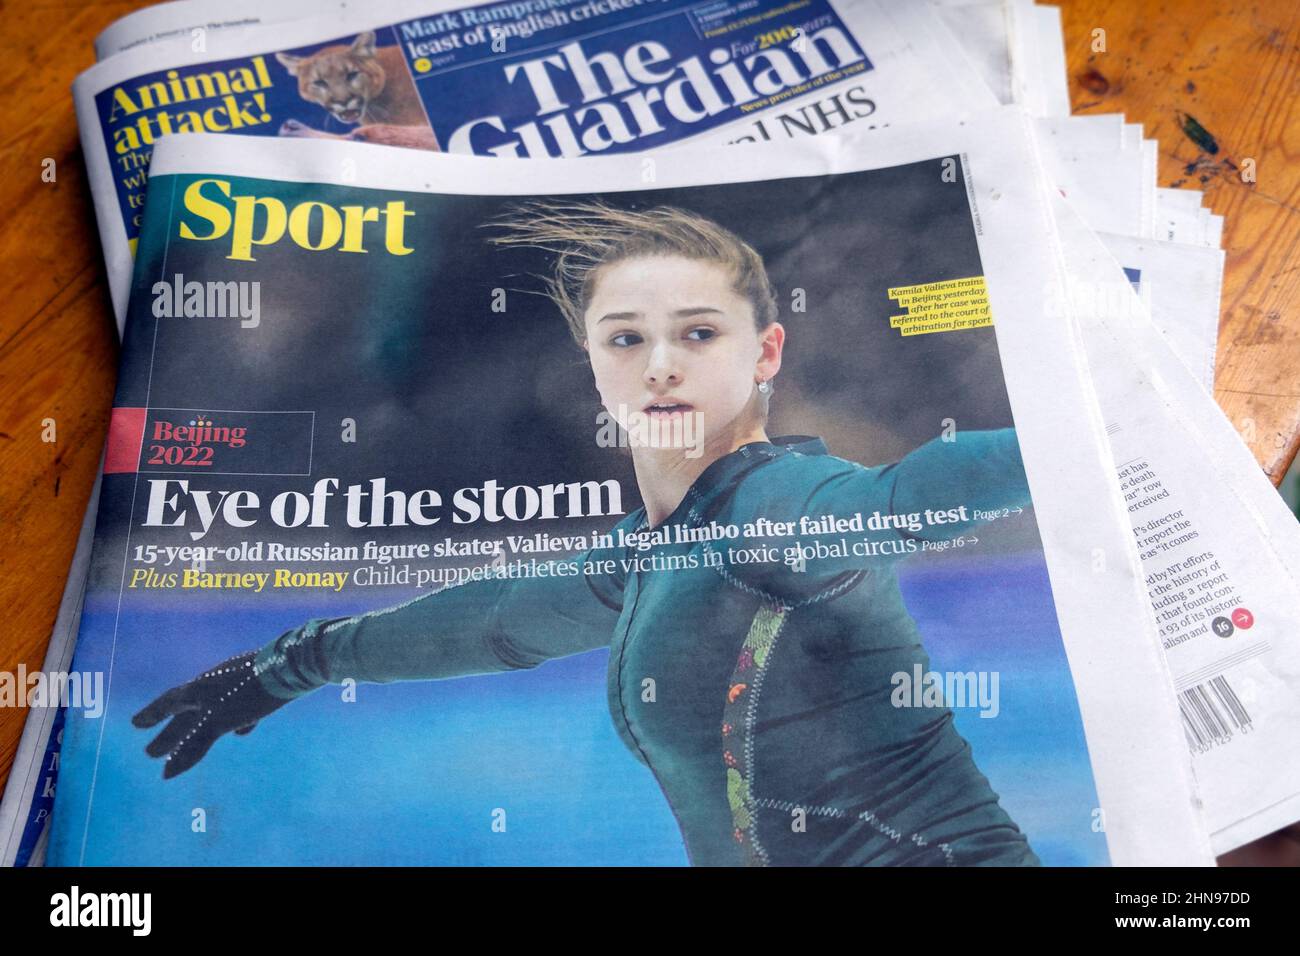 Russian skater Kamila Valieva failed drug test Beijing 2022 Olympics Guardian front page Sport section newspaper headline 'Eye of the Storm' London UK Stock Photo